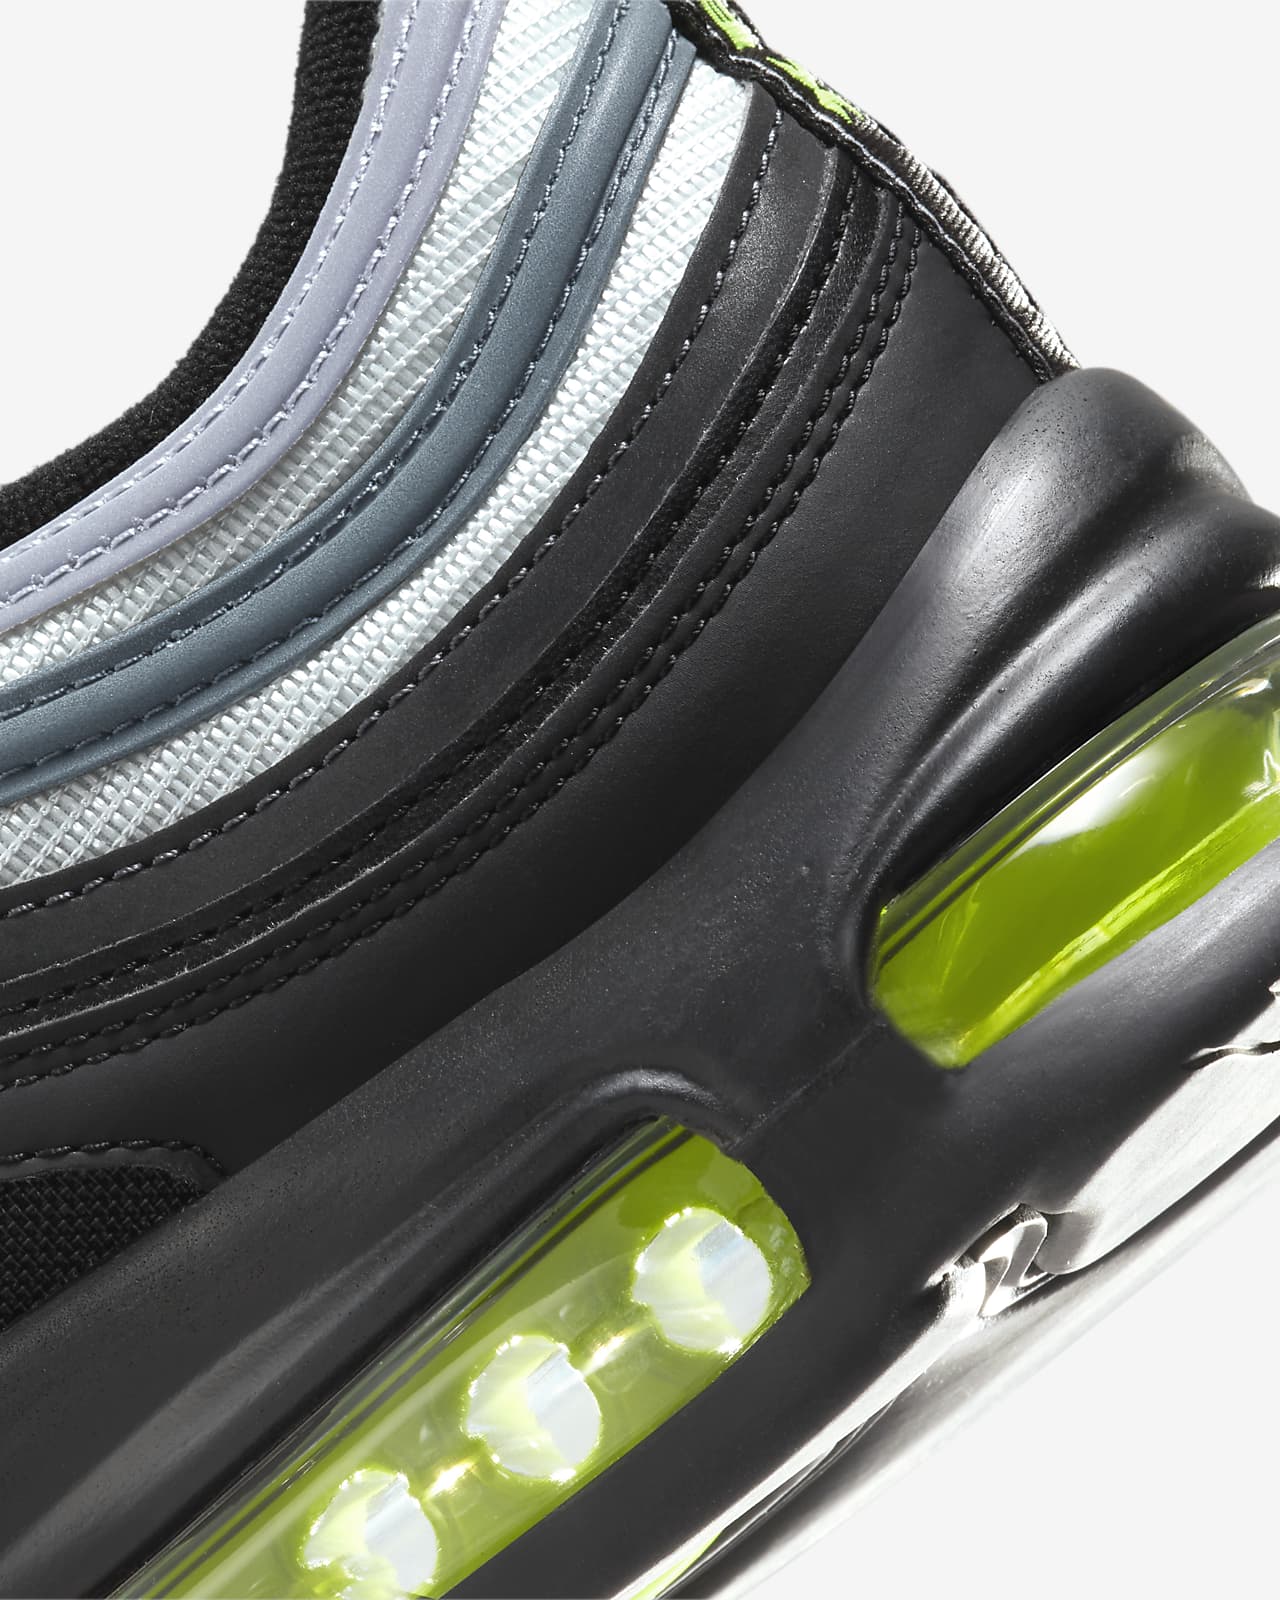 Nike Air Max 97 Available on NIKEiD